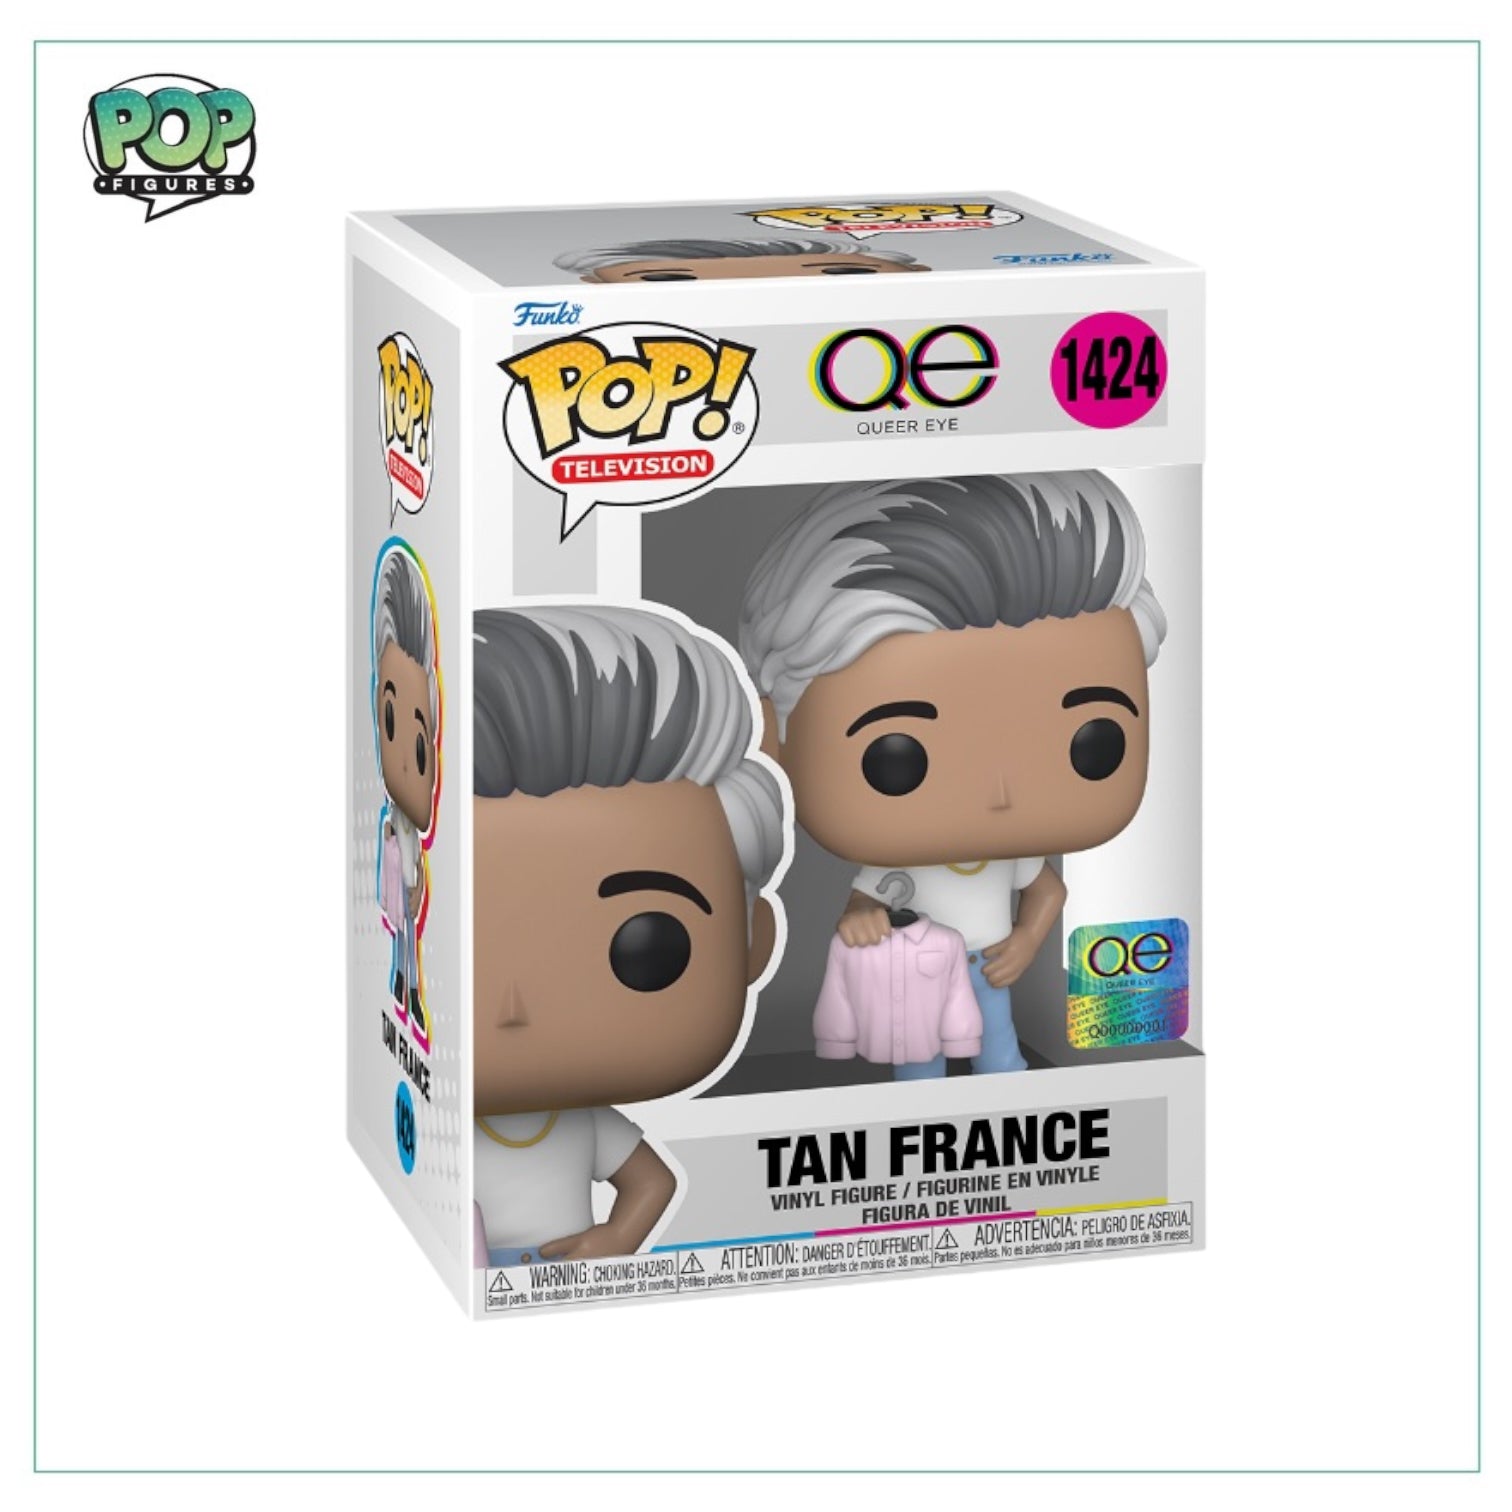 Tan France #1424 Funko Pop! Queer Eye